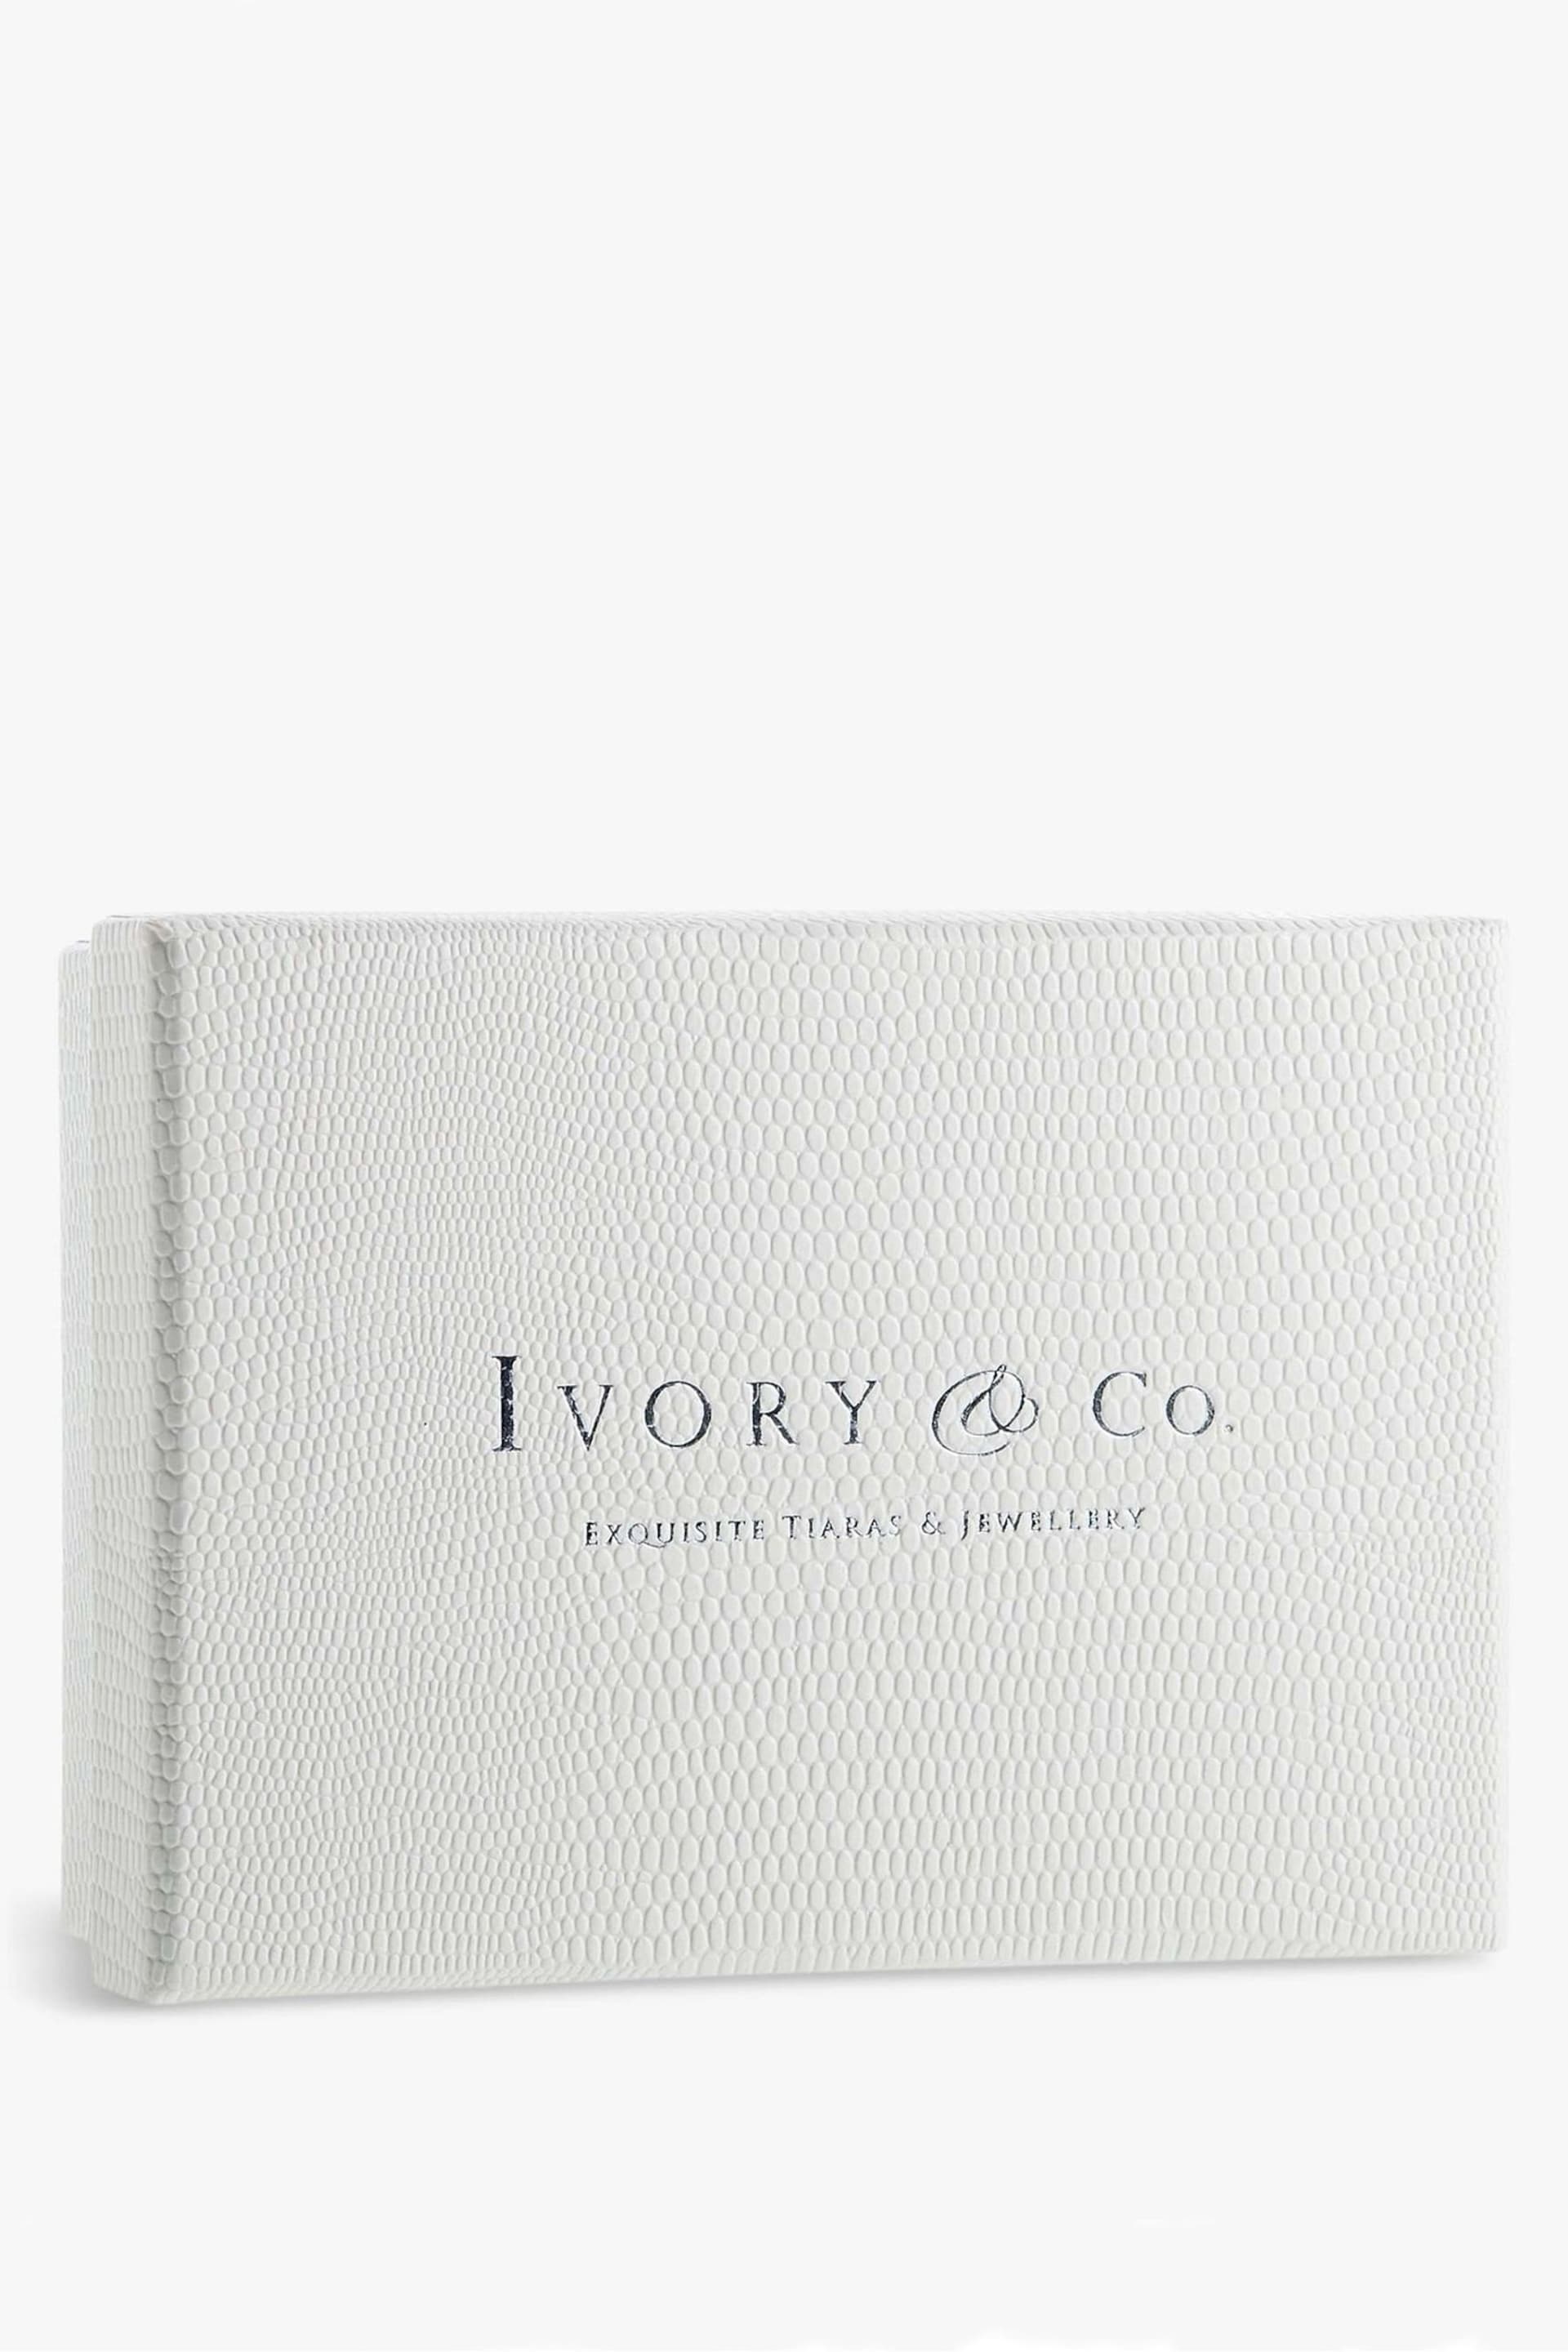 Ivory & Co Silver Snowdrop Pretty Ceramic Floral Clip - Image 5 of 5